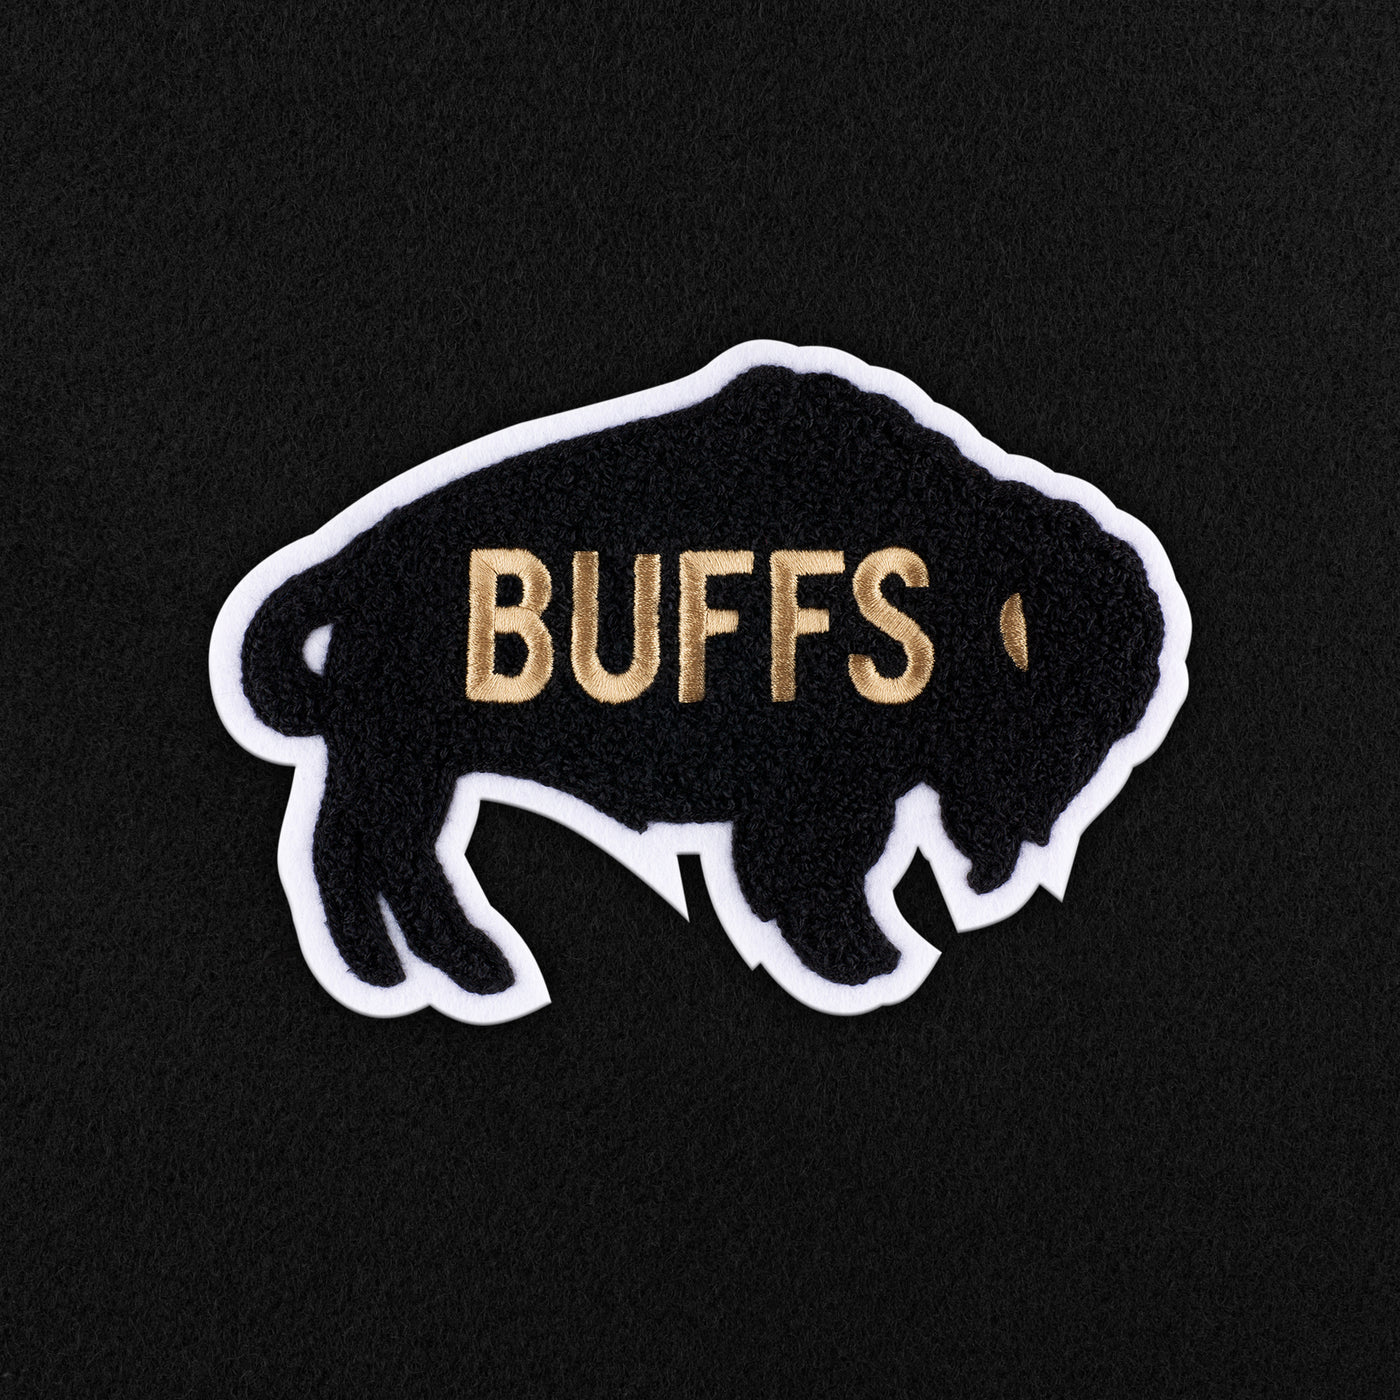 Colorado Buffaloes Vintage "Buffs" Tote Bag